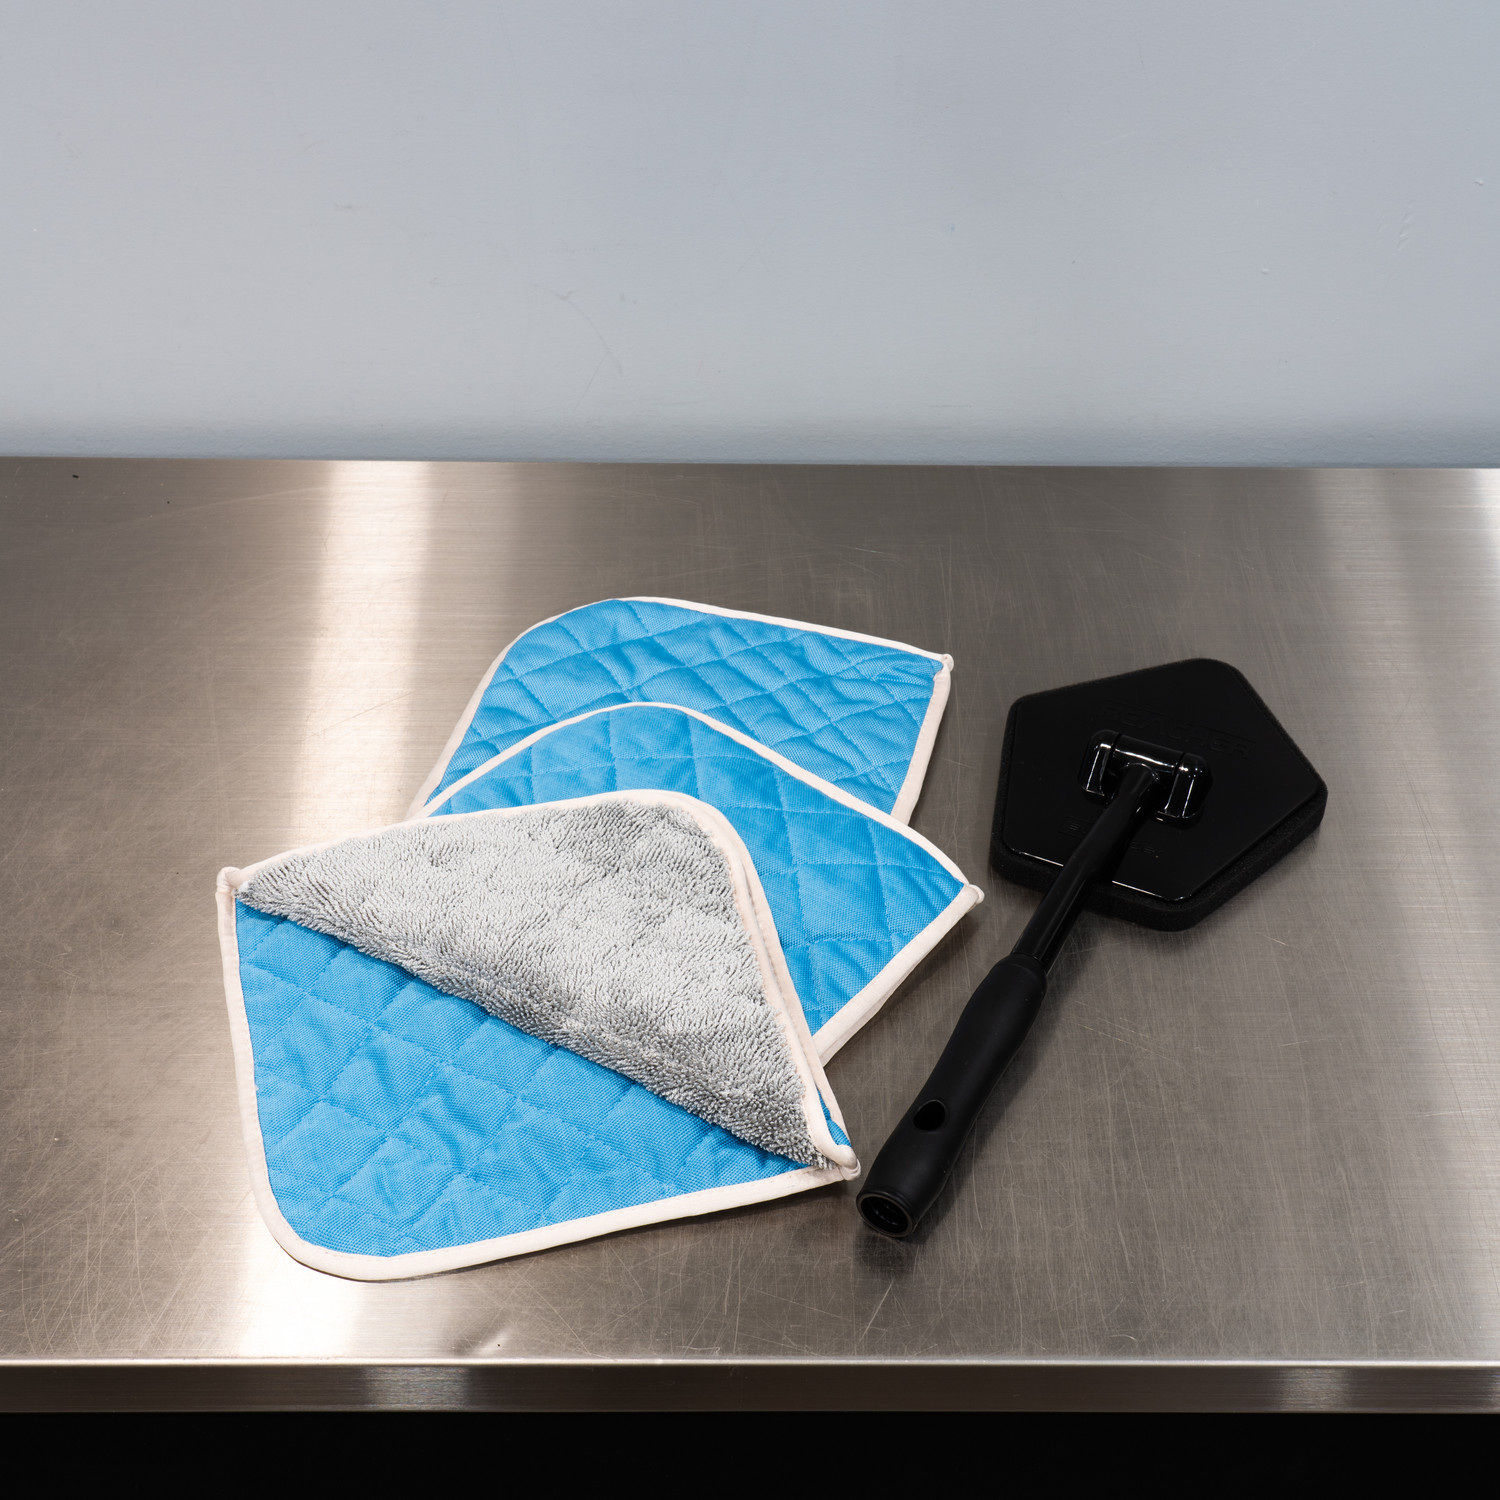 Microfiber Wash Pads, Set of 2